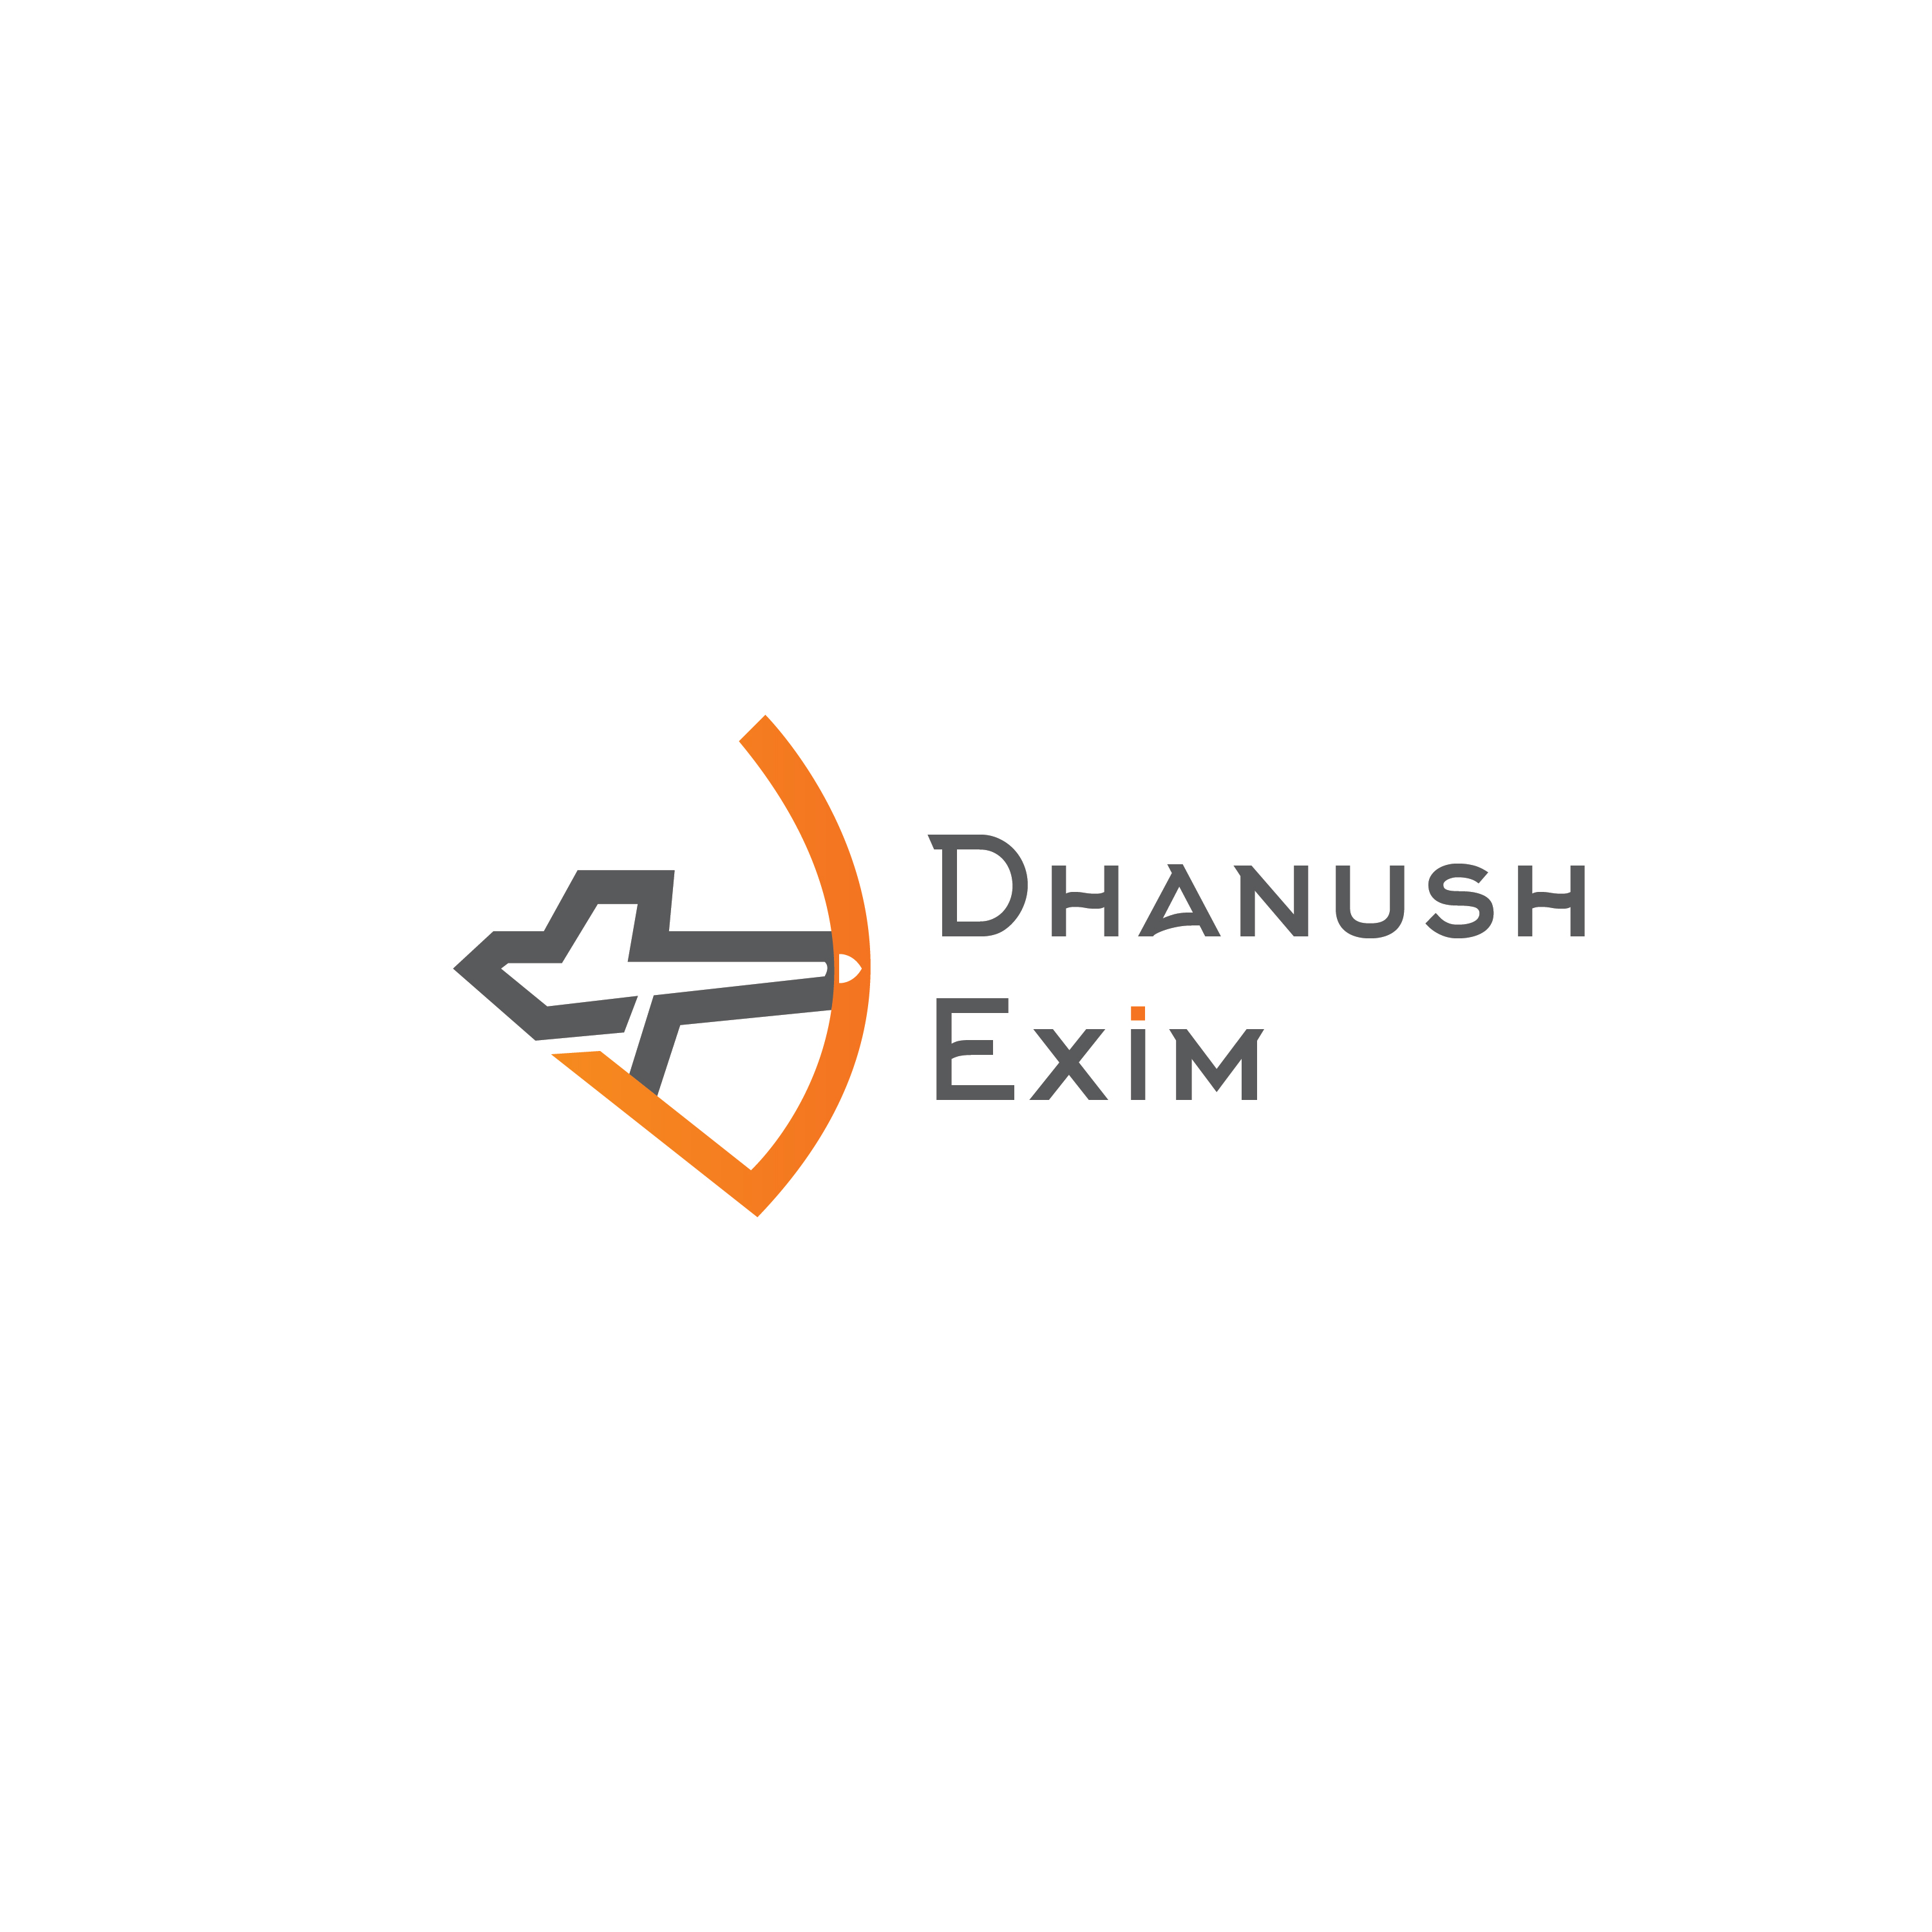 Dhanush Exim